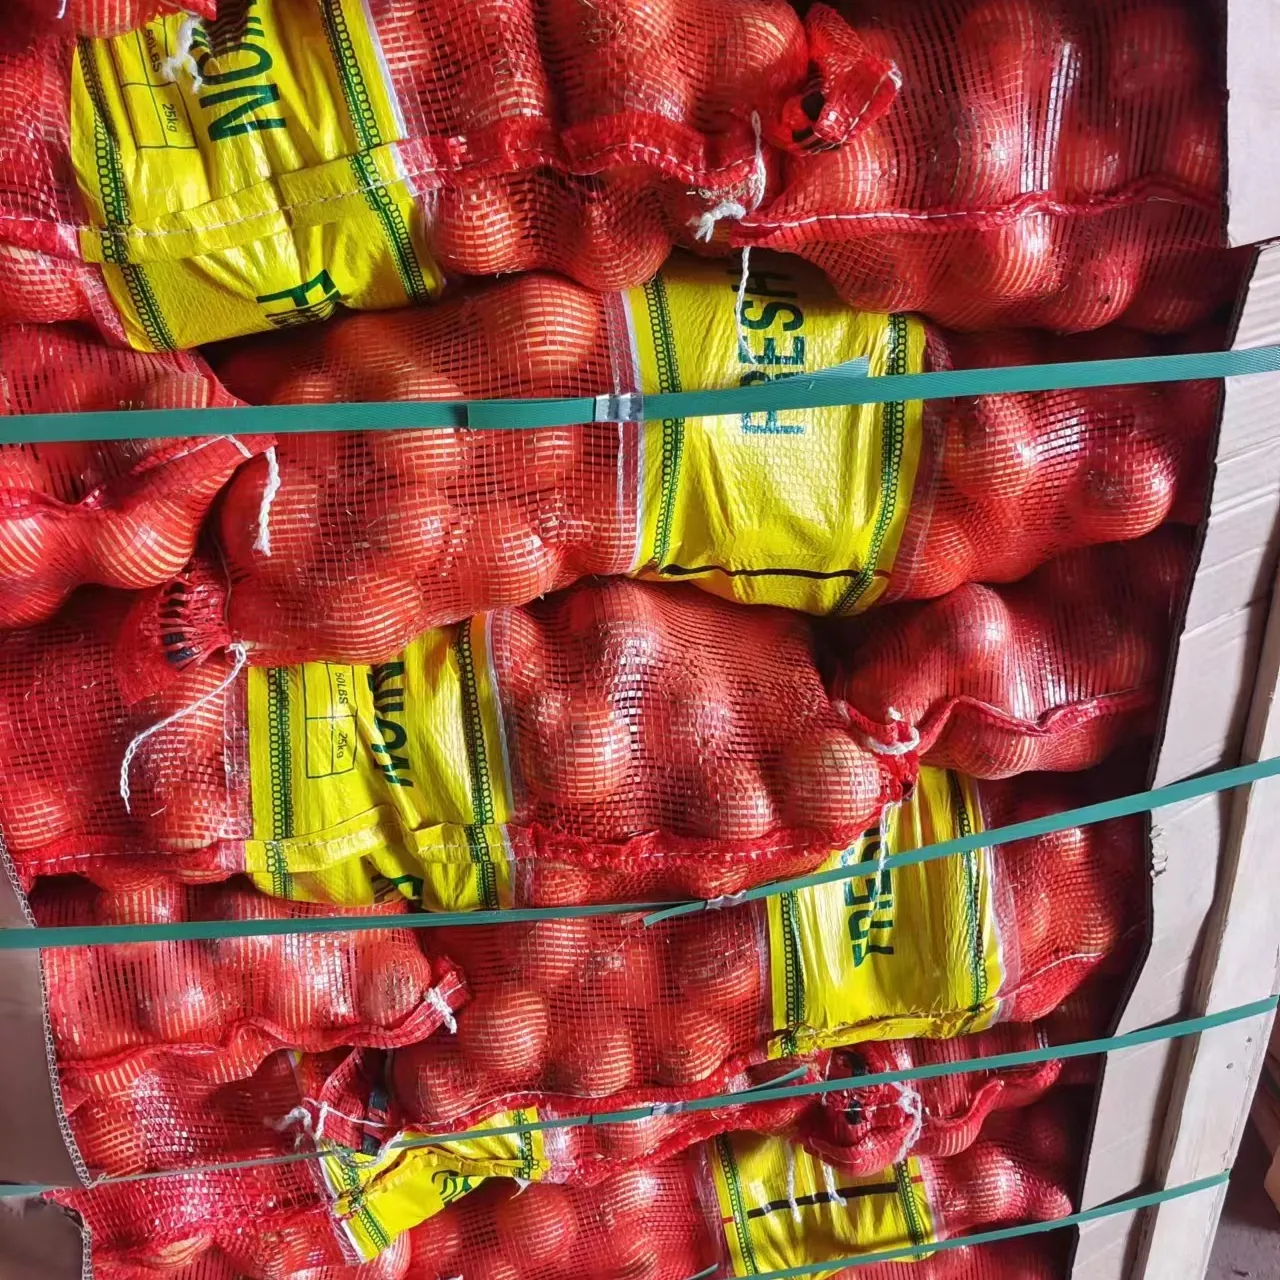 Grosir kualitas terbaik Tiongkok Harga Murah pemasok bawang merah segar bawang kuning 1 ton harga dijual